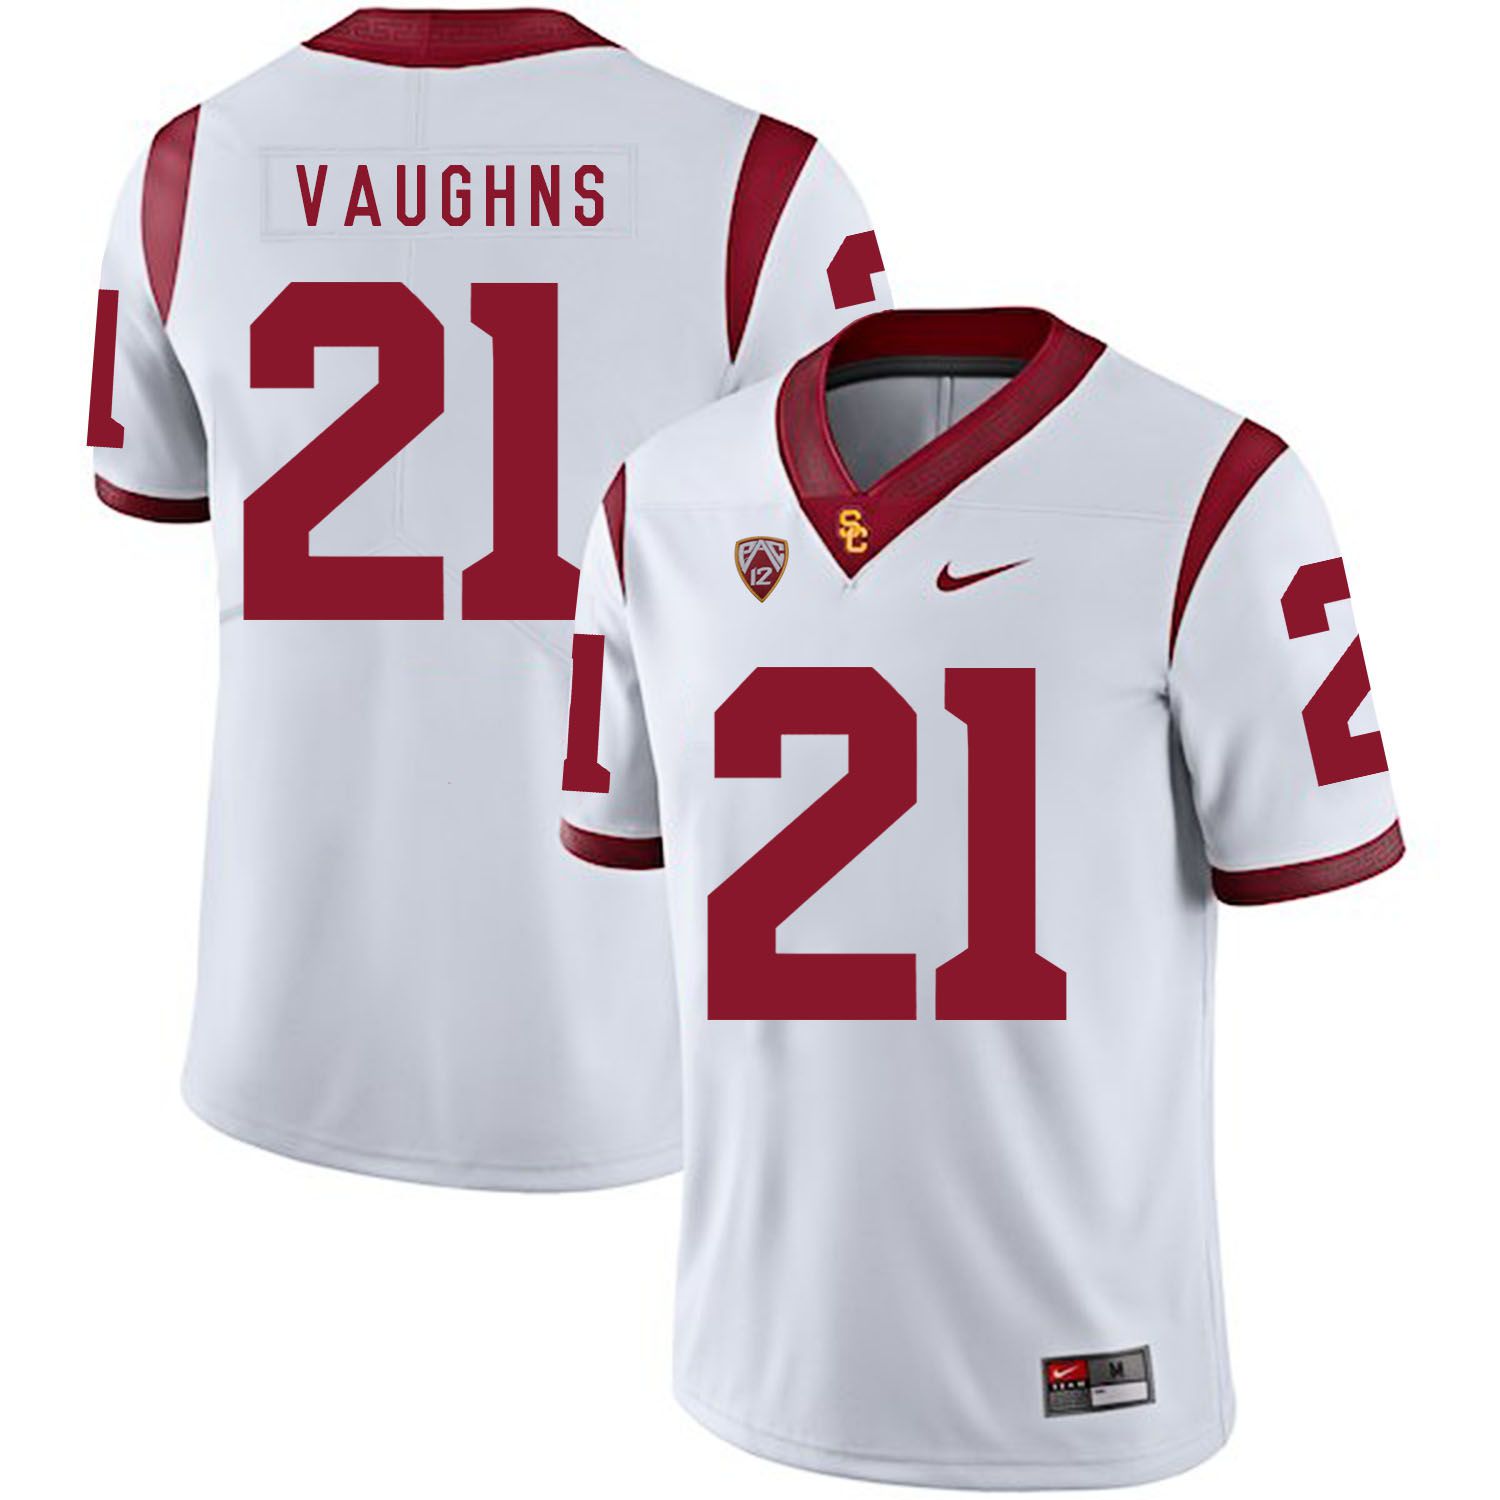 Men USC Trojans #21 Vaughns White Customized NCAA Jerseys